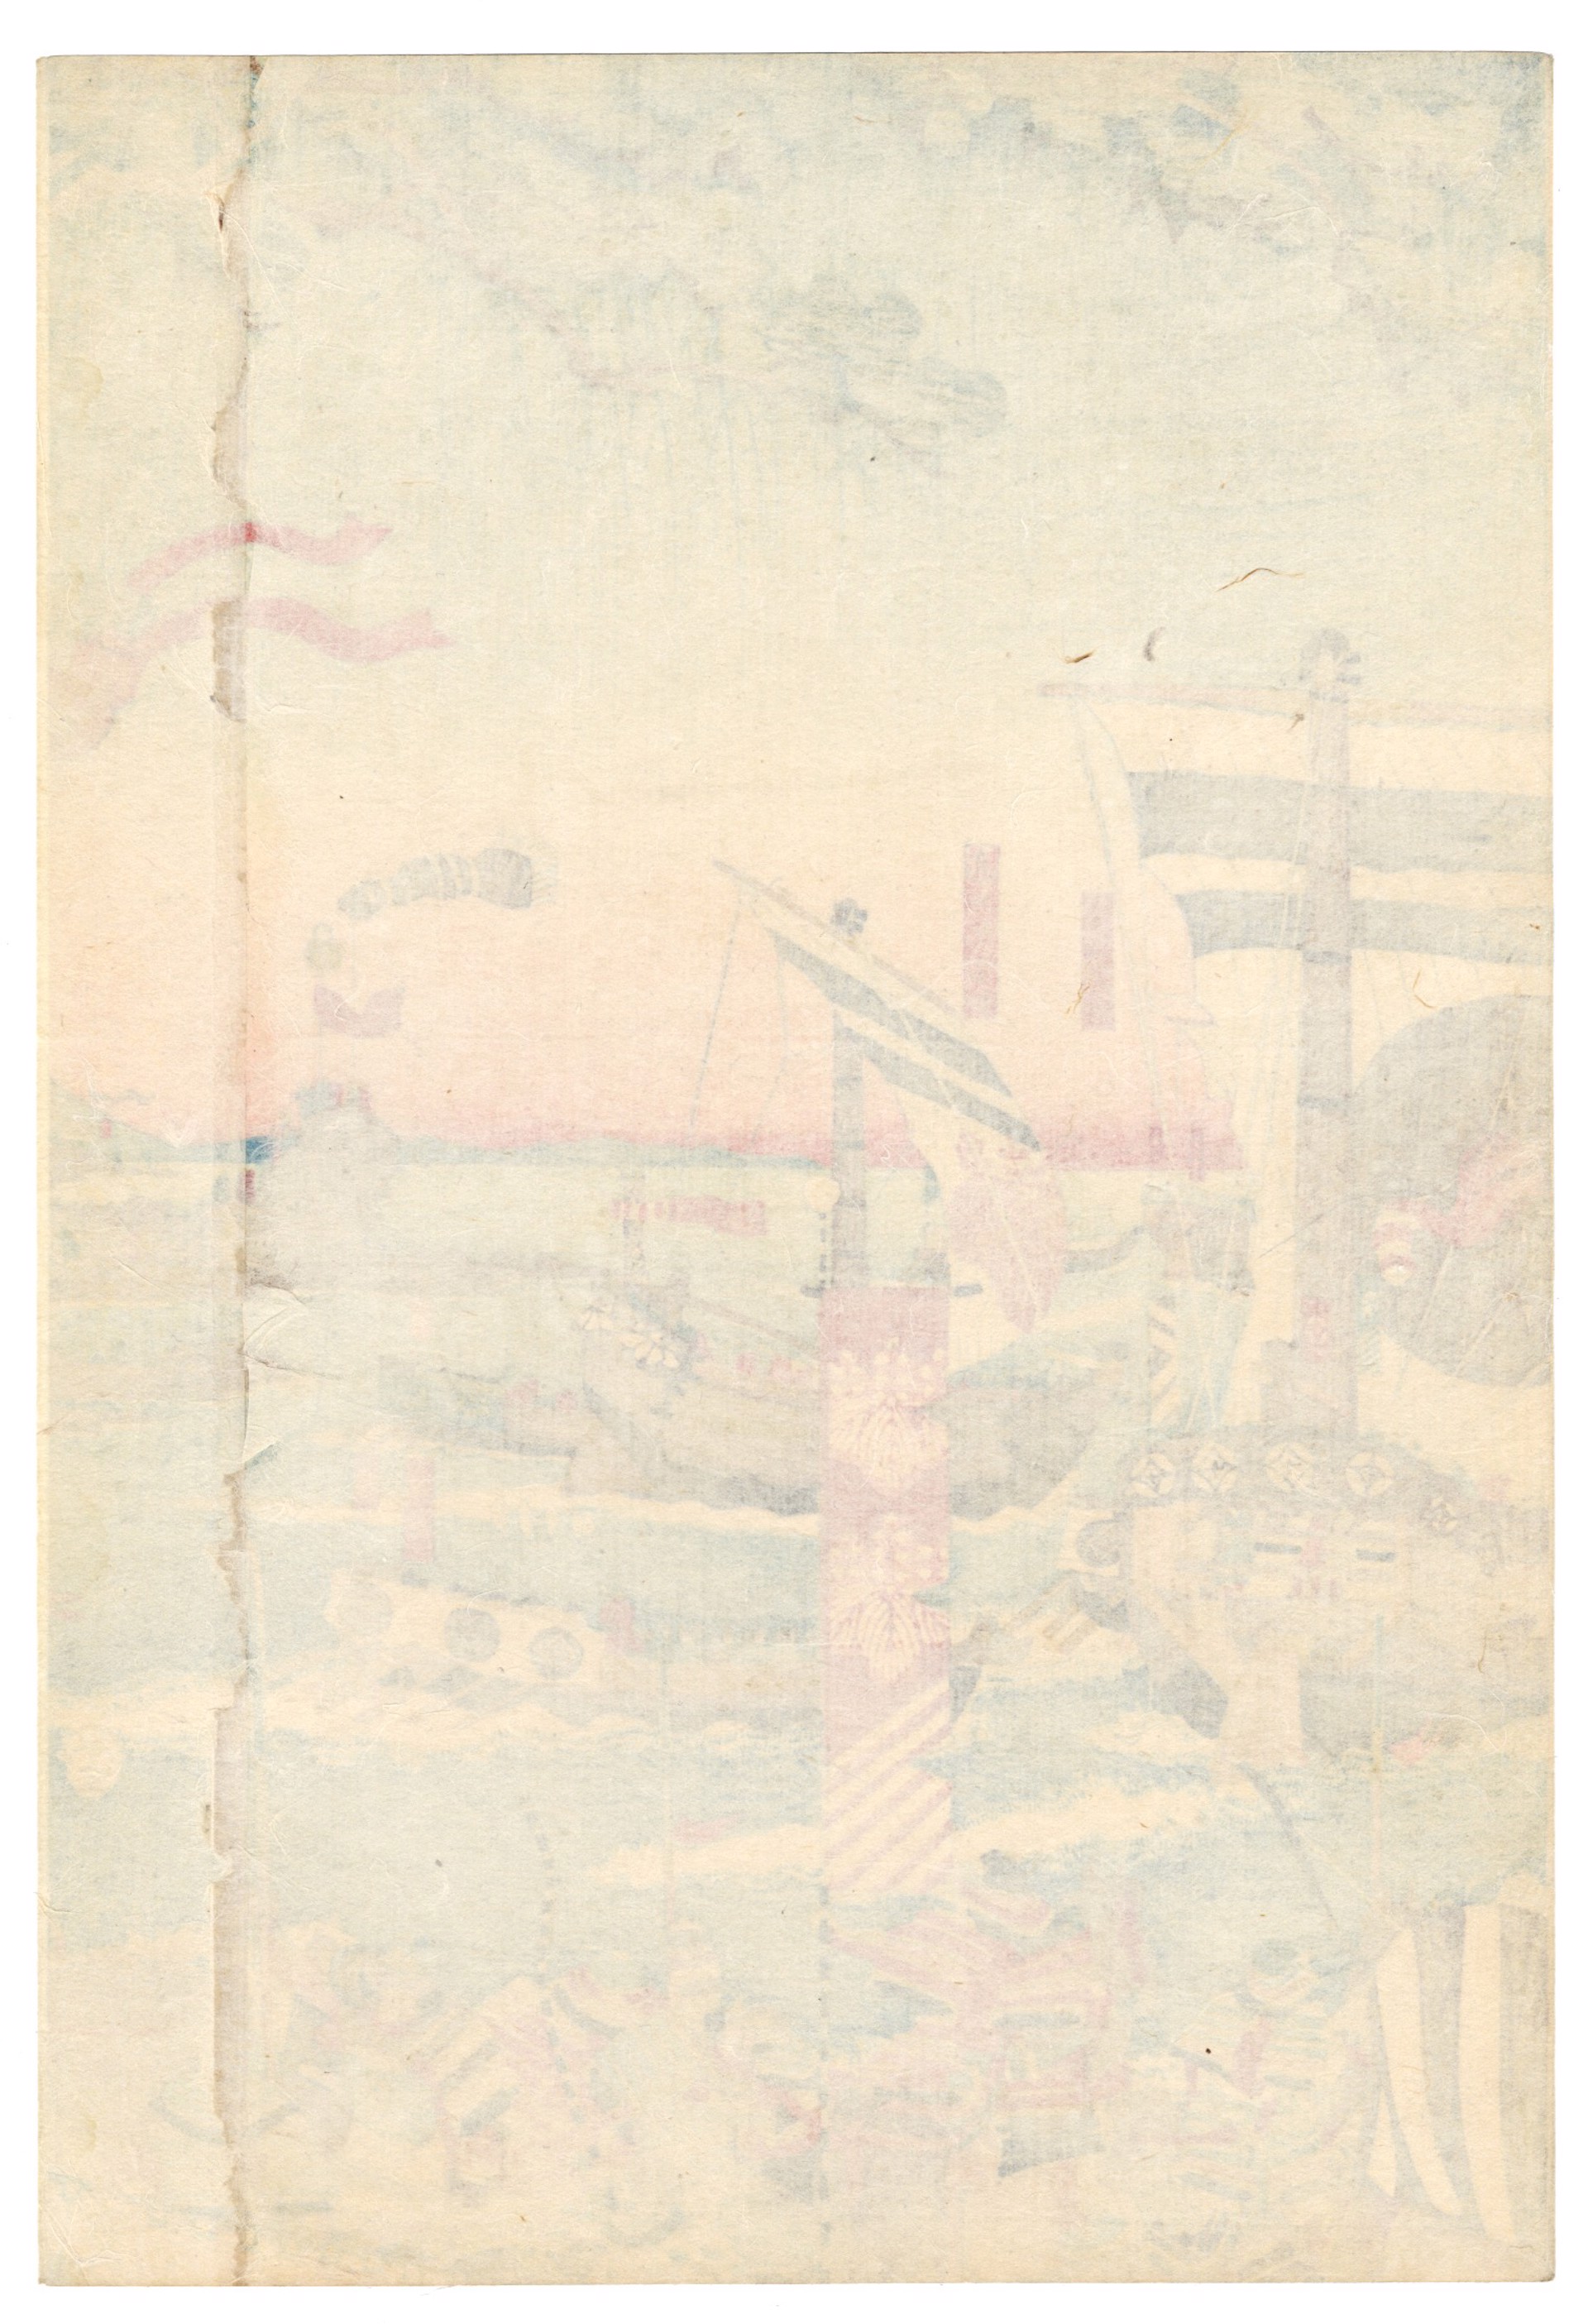 Ashikaga Takauji Sets Sail for Minatogawa by Sadahide